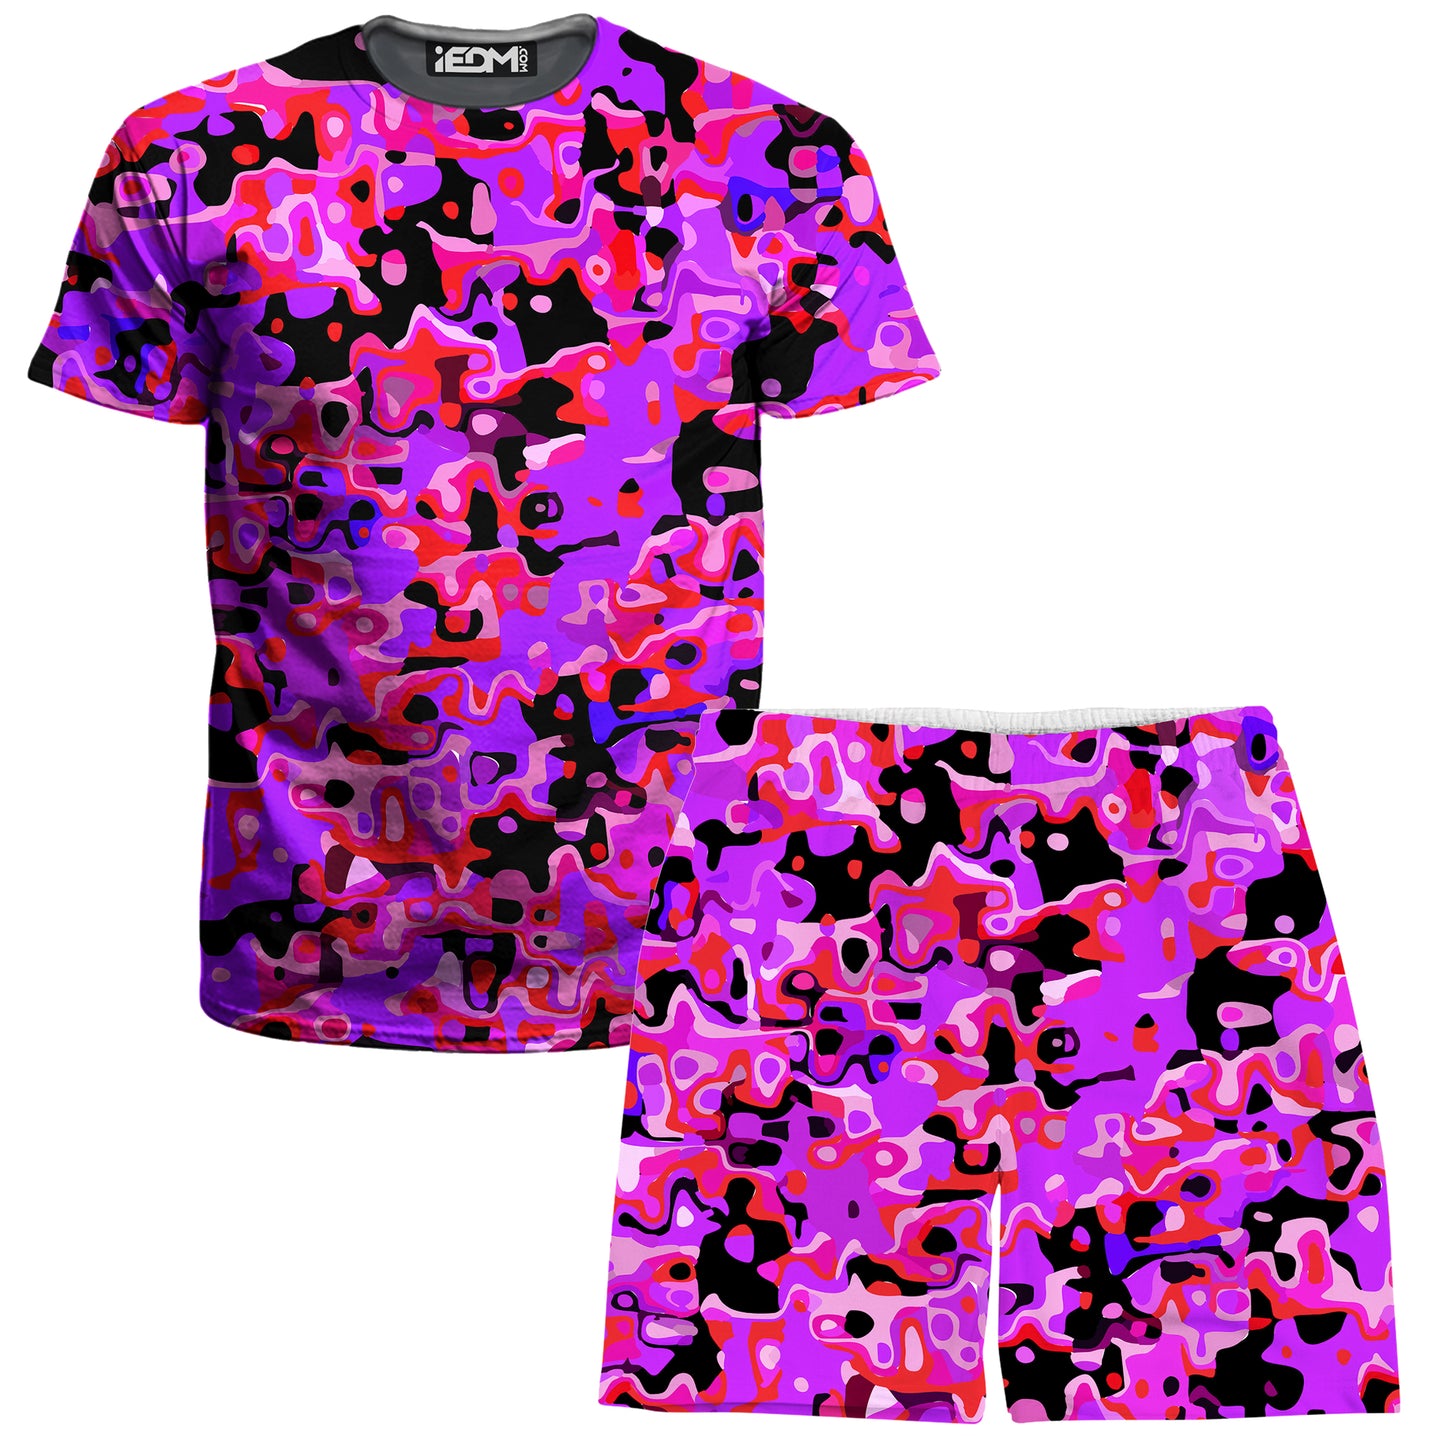 Purple Red and Black Rave Camo Melt T-Shirt and Shorts Combo, Big Tex Funkadelic, | iEDM